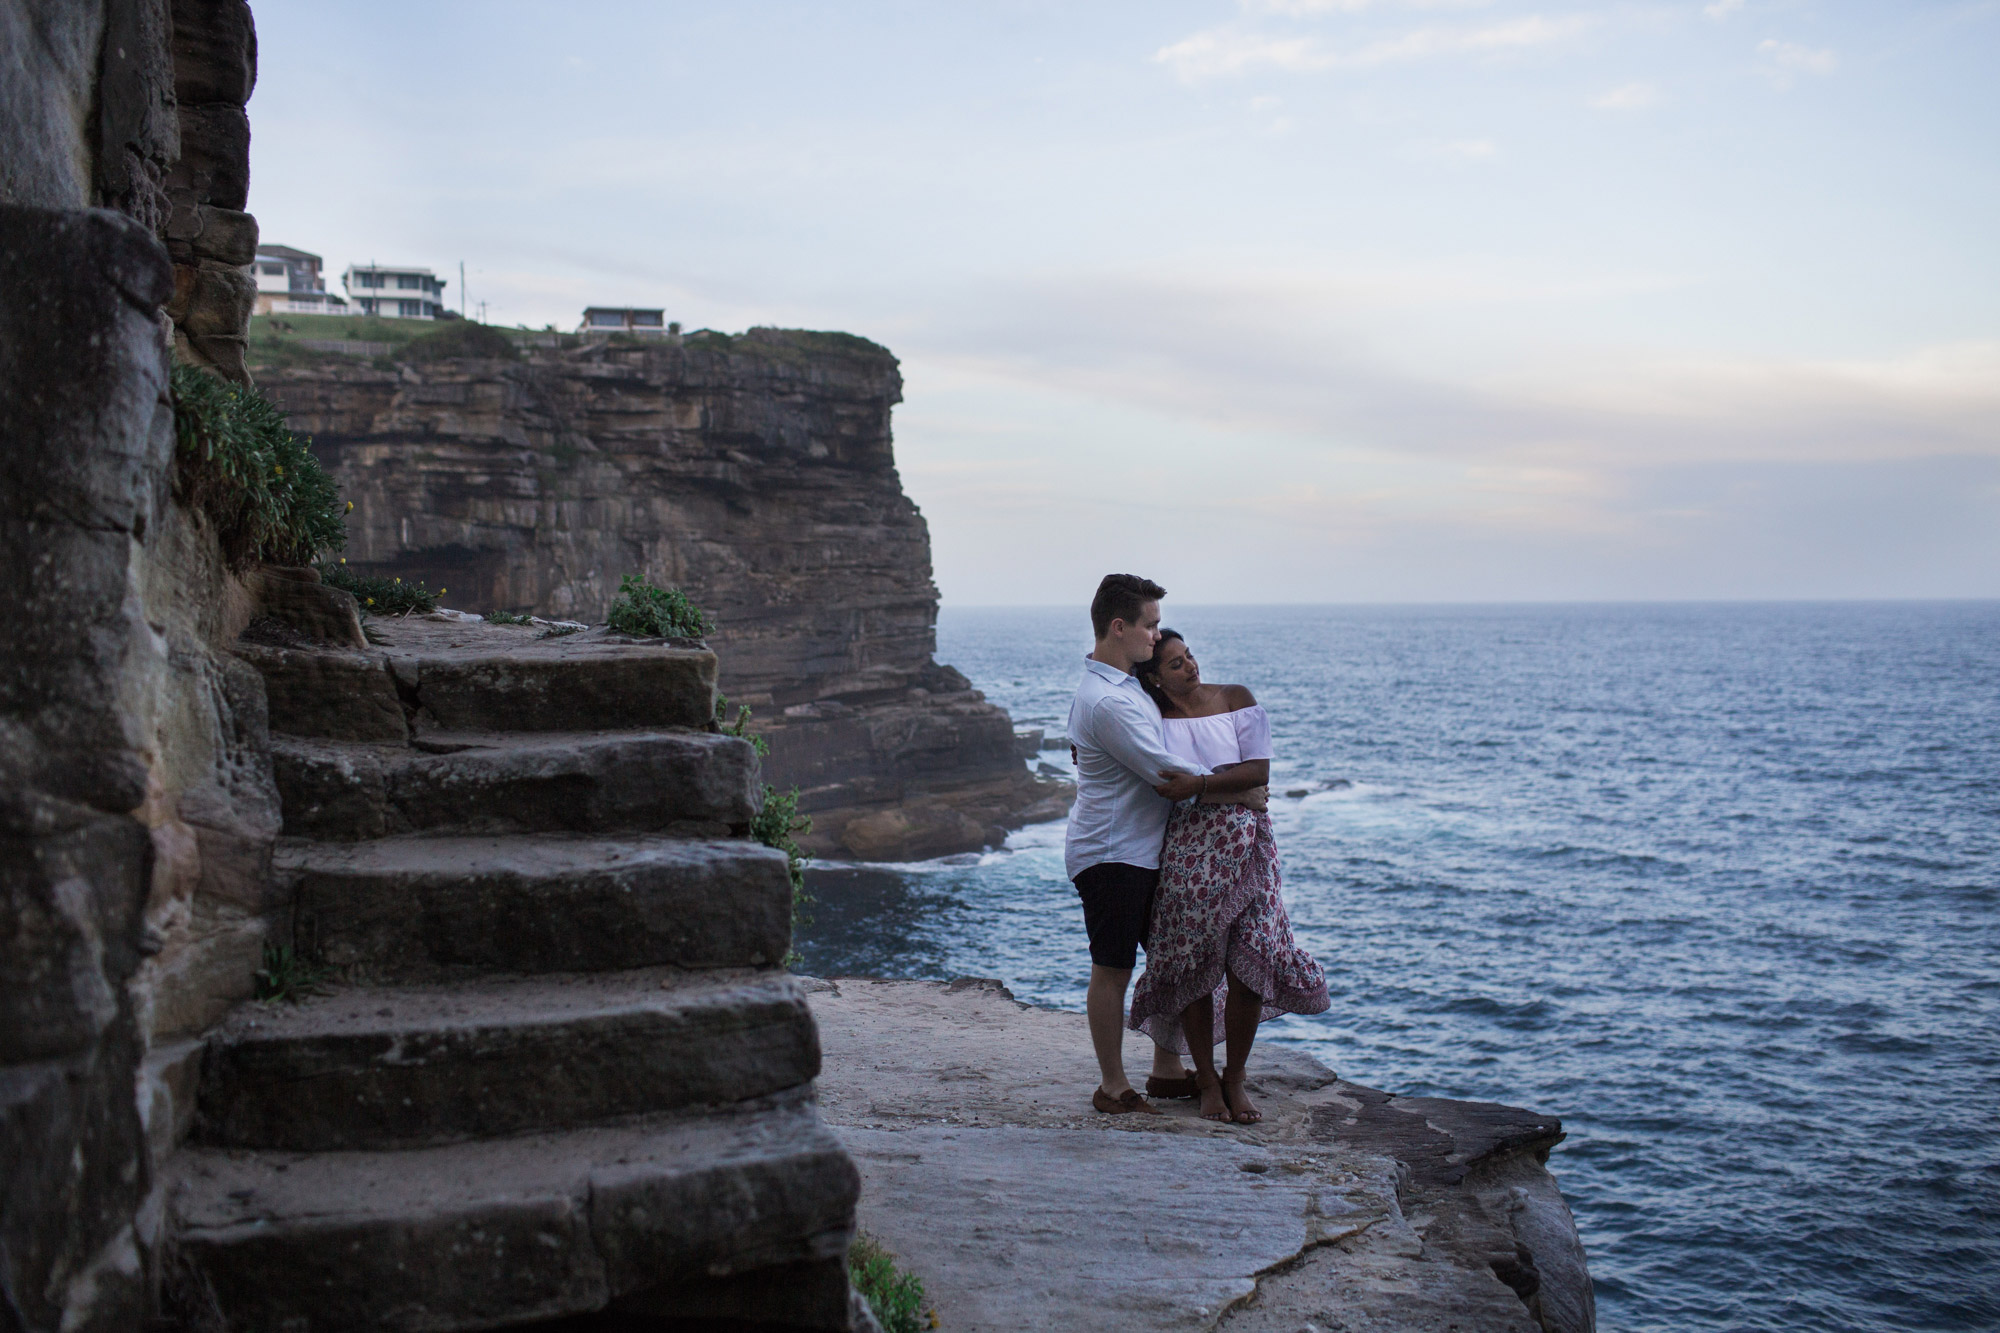 Engagement photos in Vaucluse in Sydney, Australia. Photos by Kelly Kollar Photography.